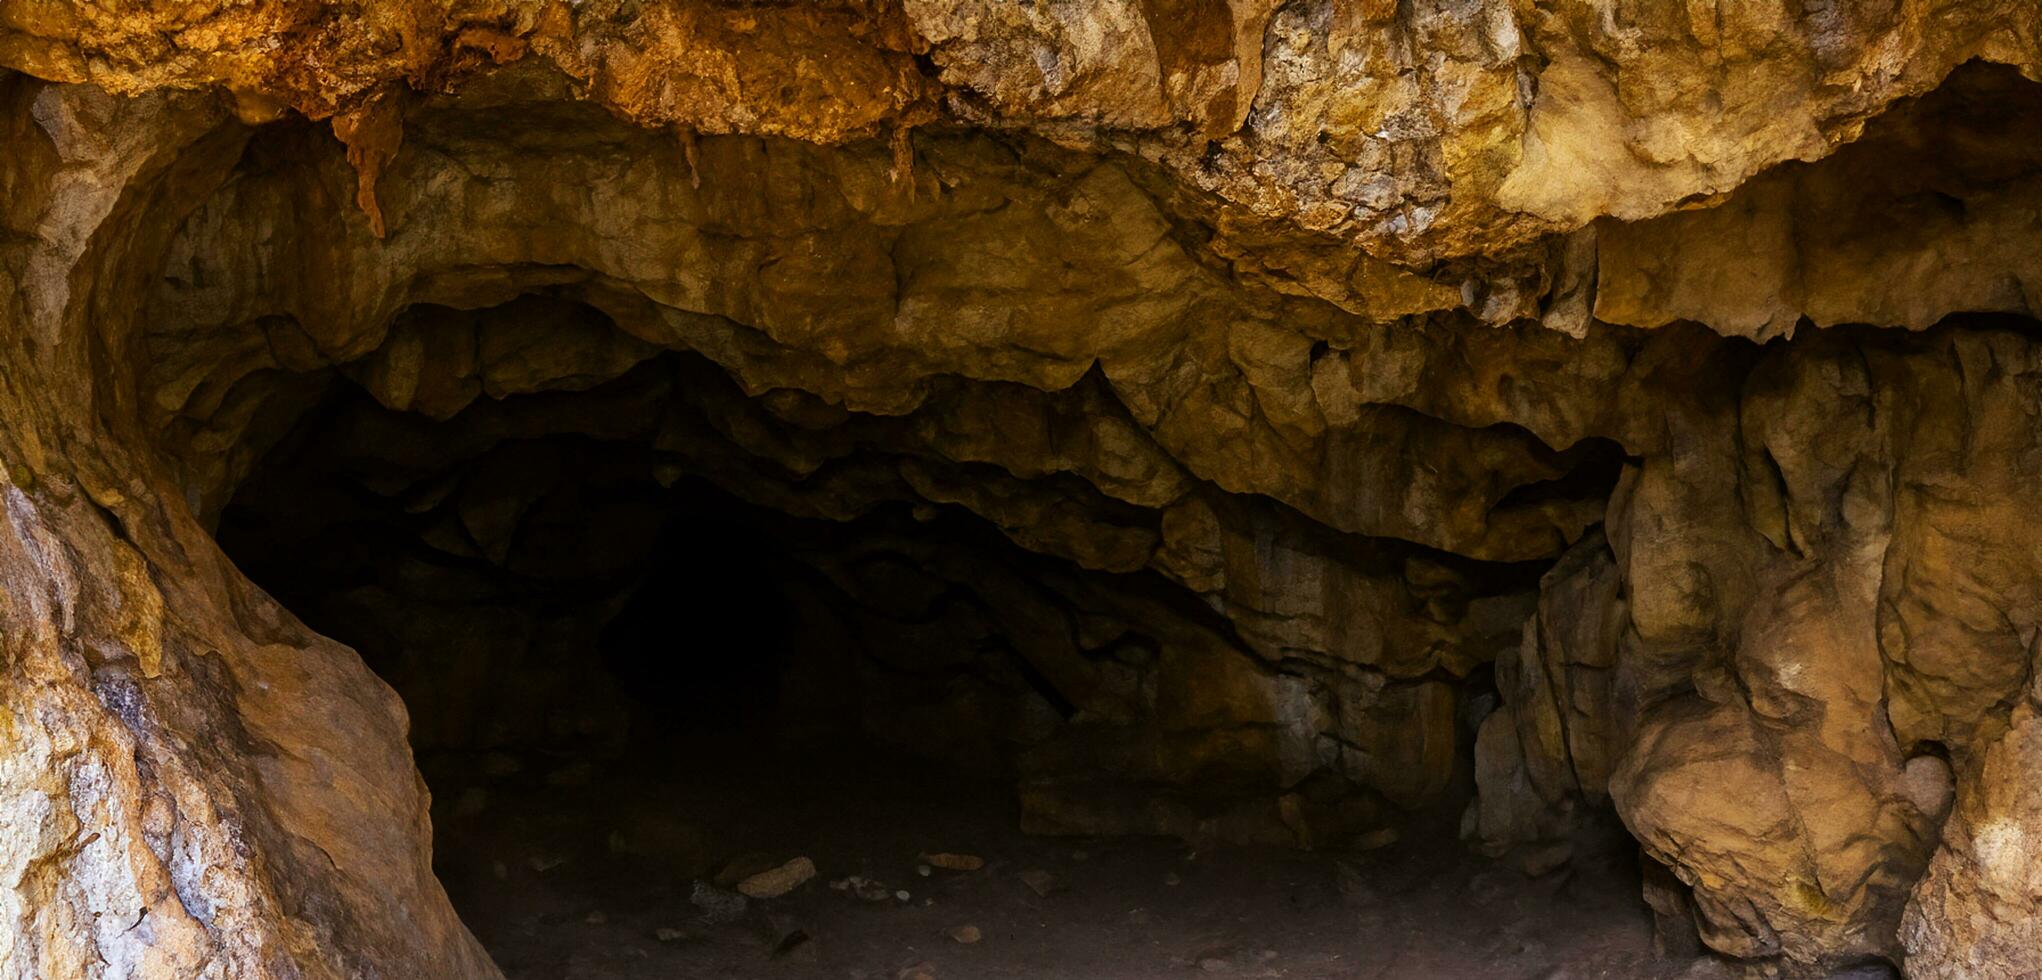 Höhle unter Tage Schlucht Höhle Tunnel Spalt im Felsen foto